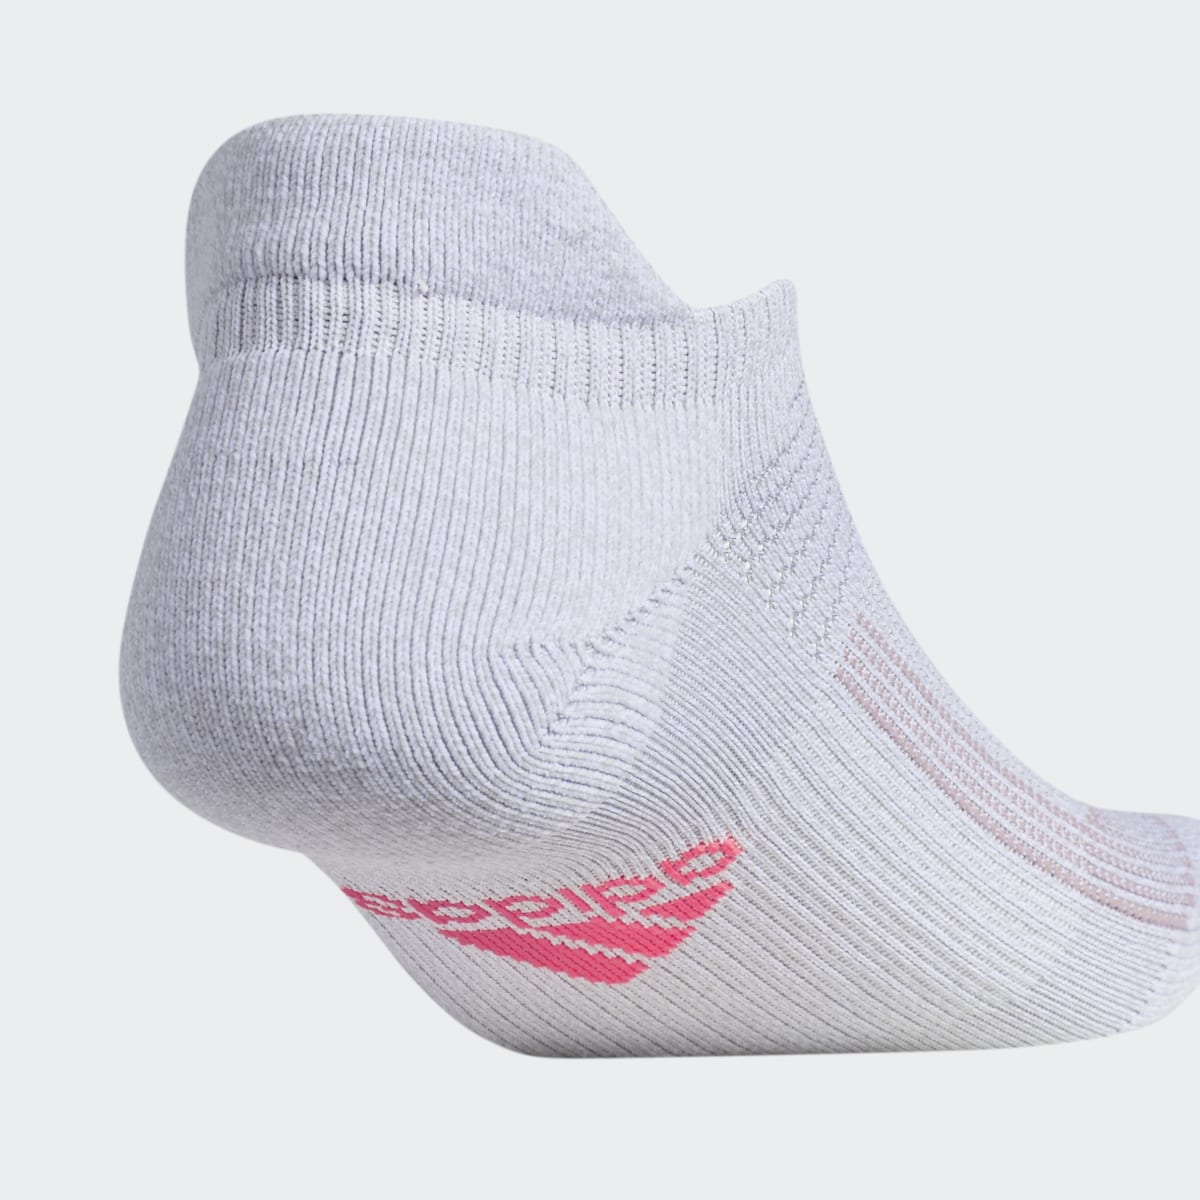 Adidas Running Superlite Tabbed No-Show Socks 2 Pairs. 5